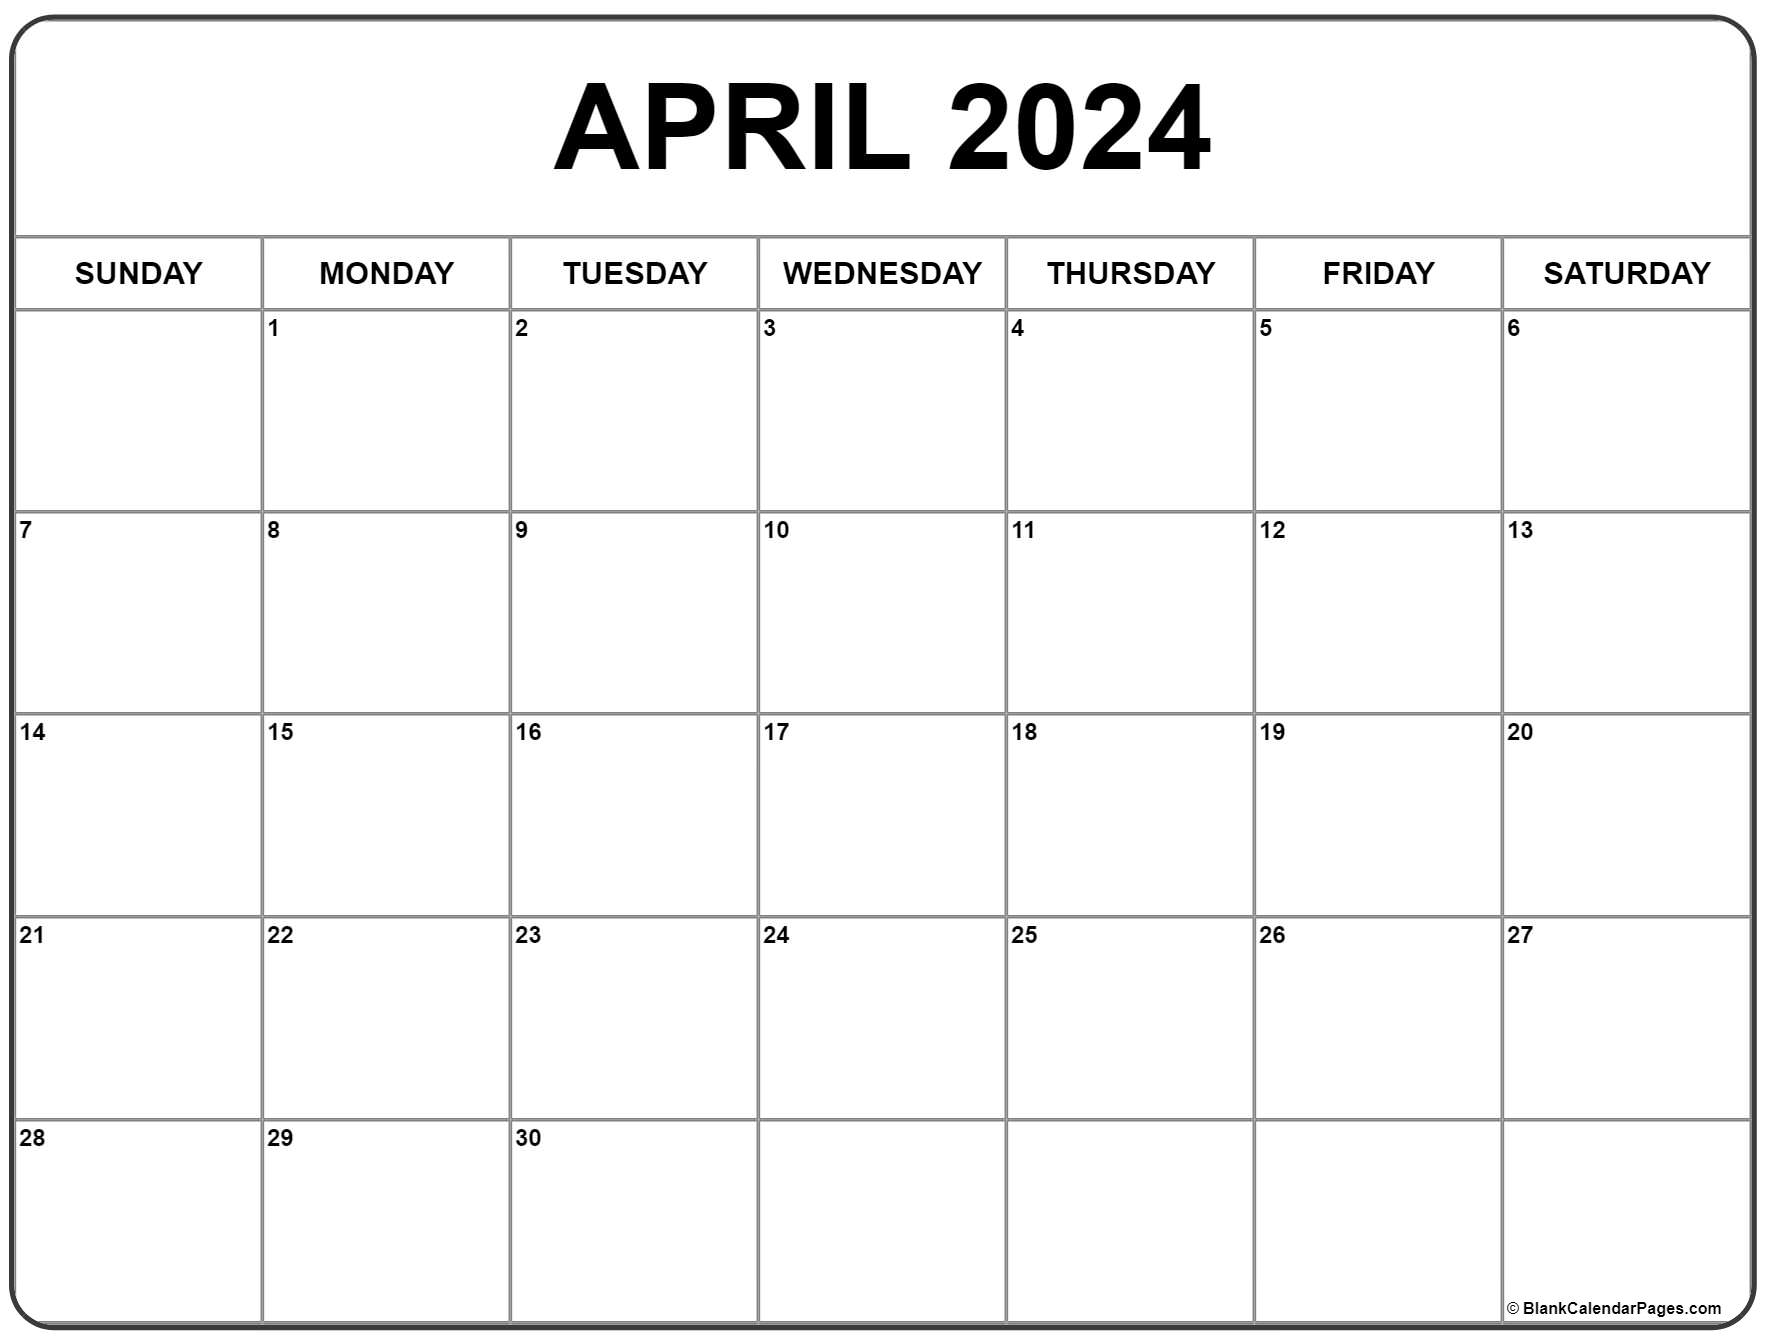 April 2024 Calendar Template Dusty Glynnis